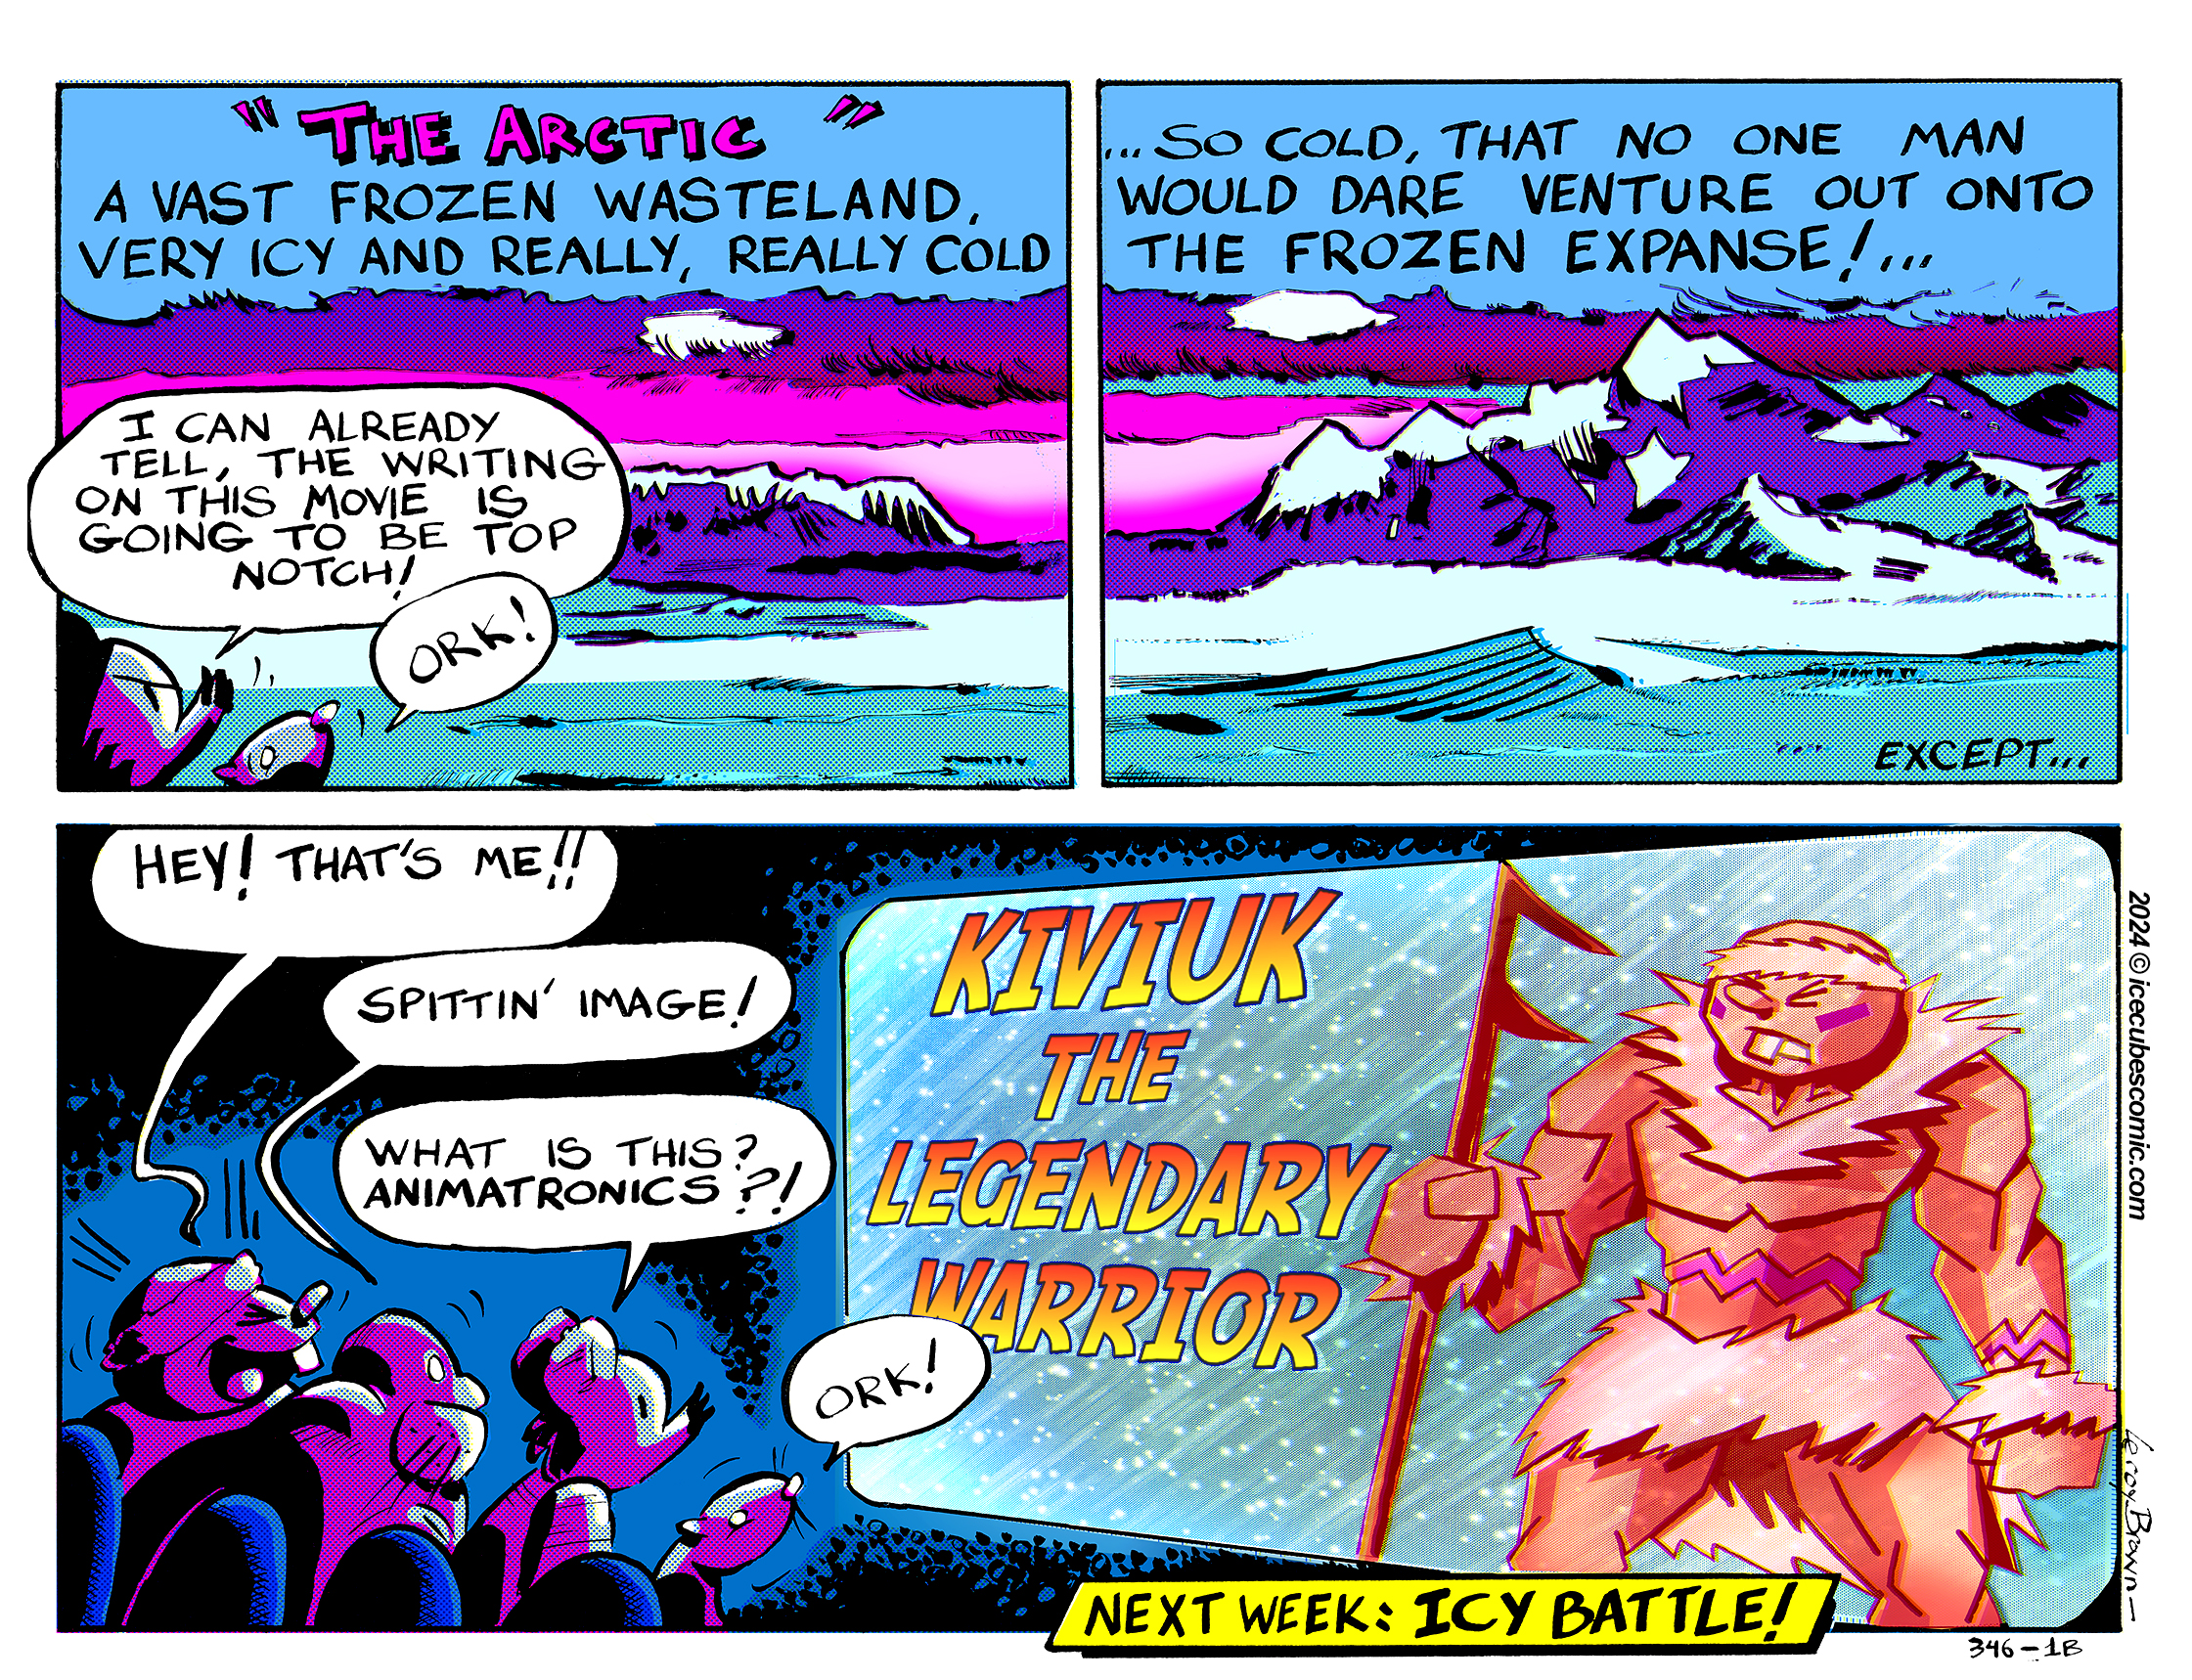 ICECUBES the comic strip #346-1b